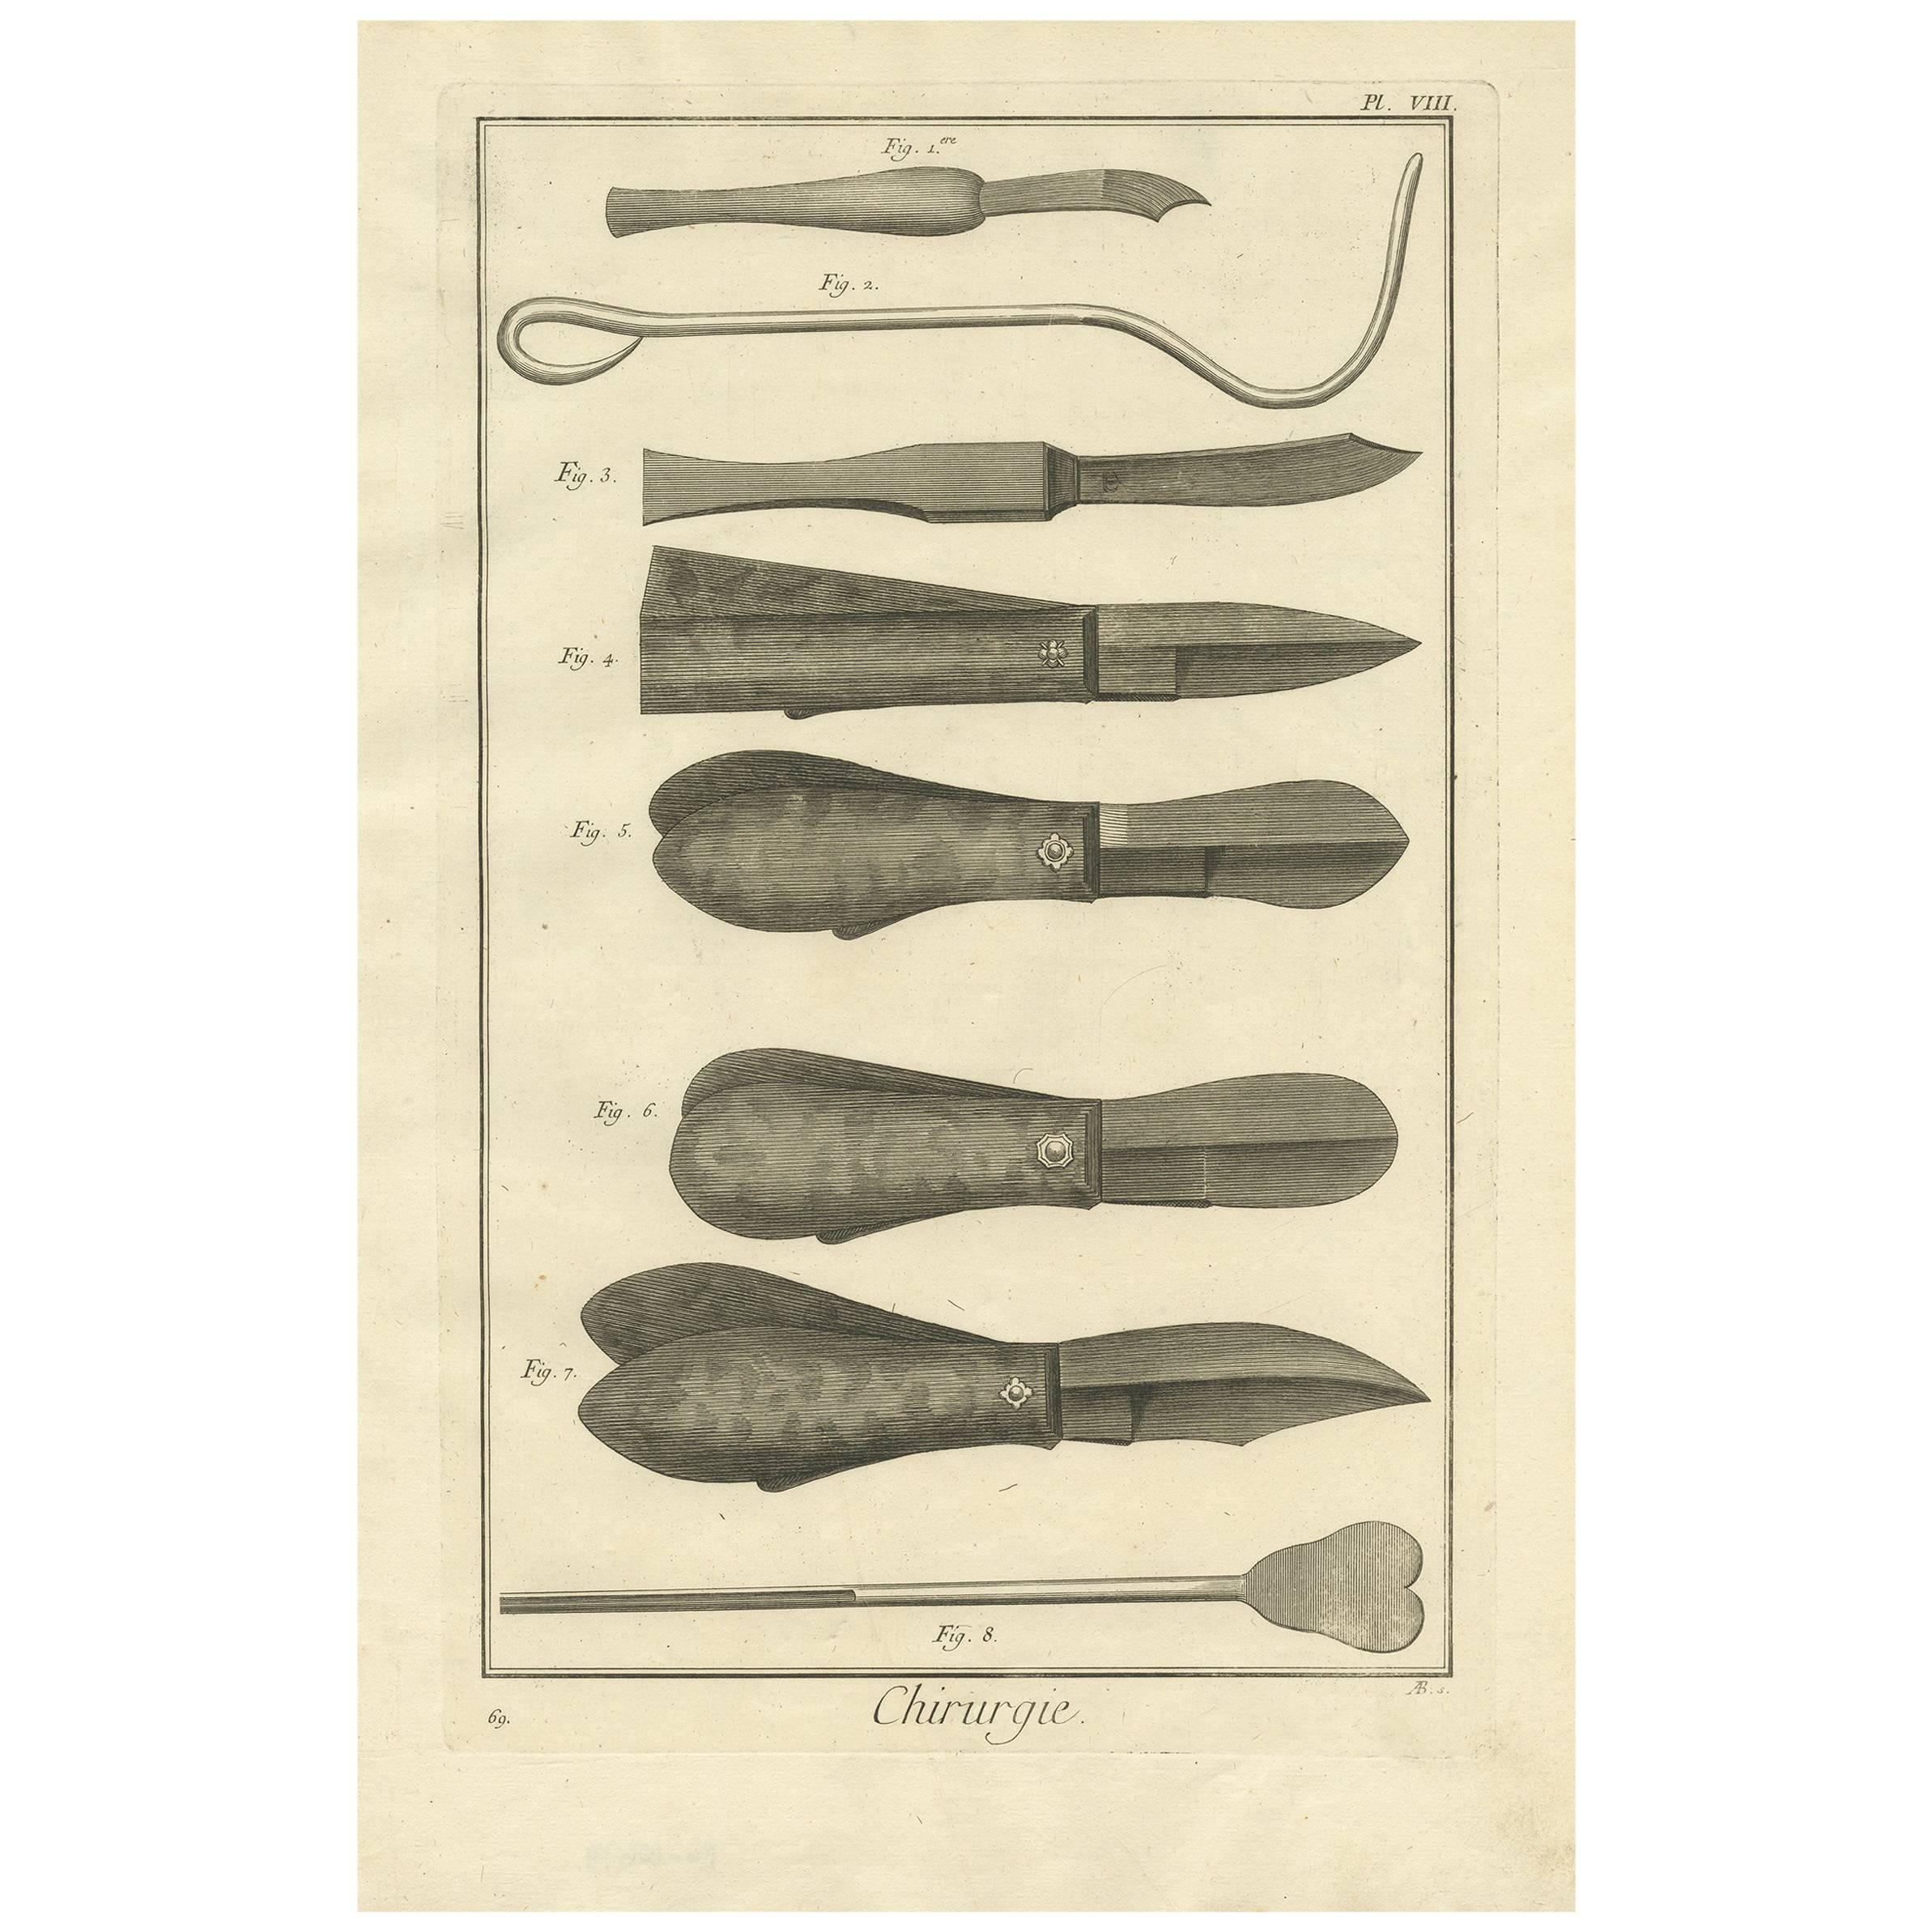 Antique Medical Print of Surgical Stones to Remove Stones, circa 1760